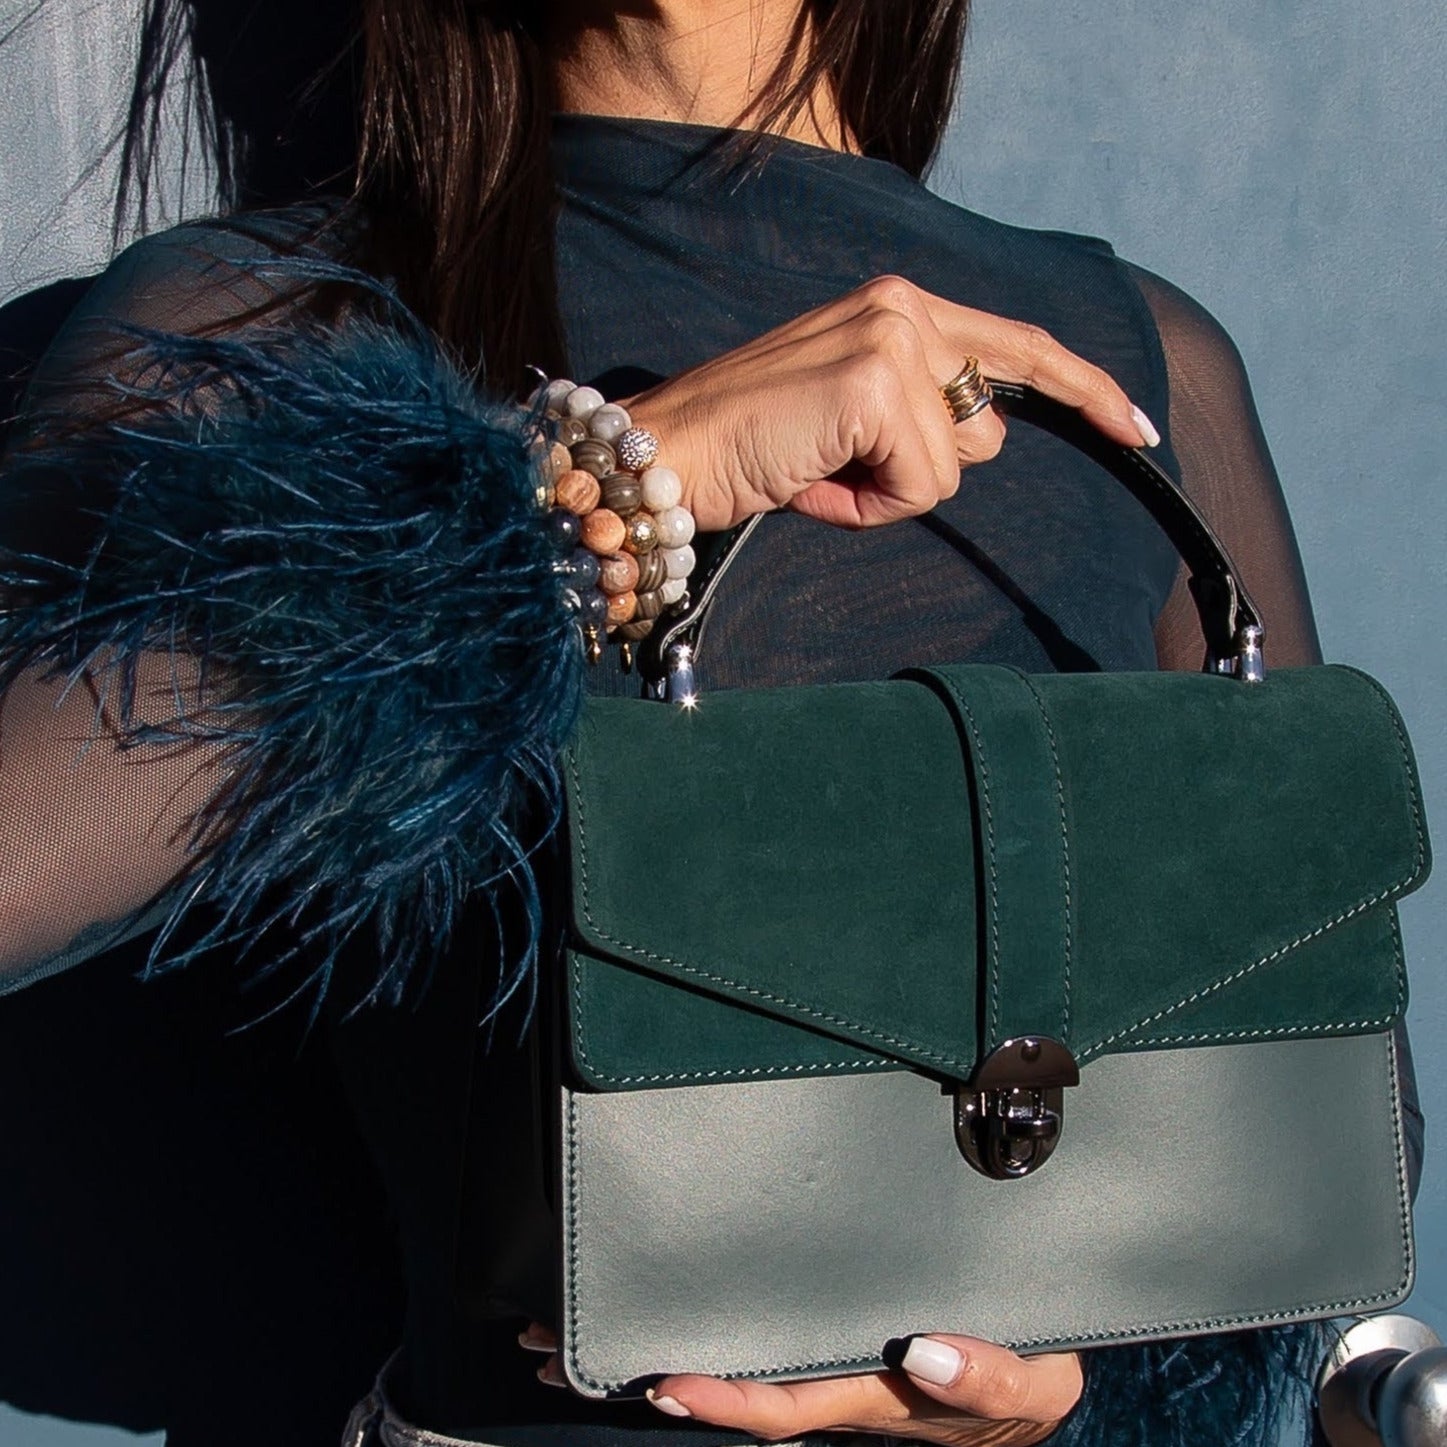 Angelina Emerald Leather Handbag